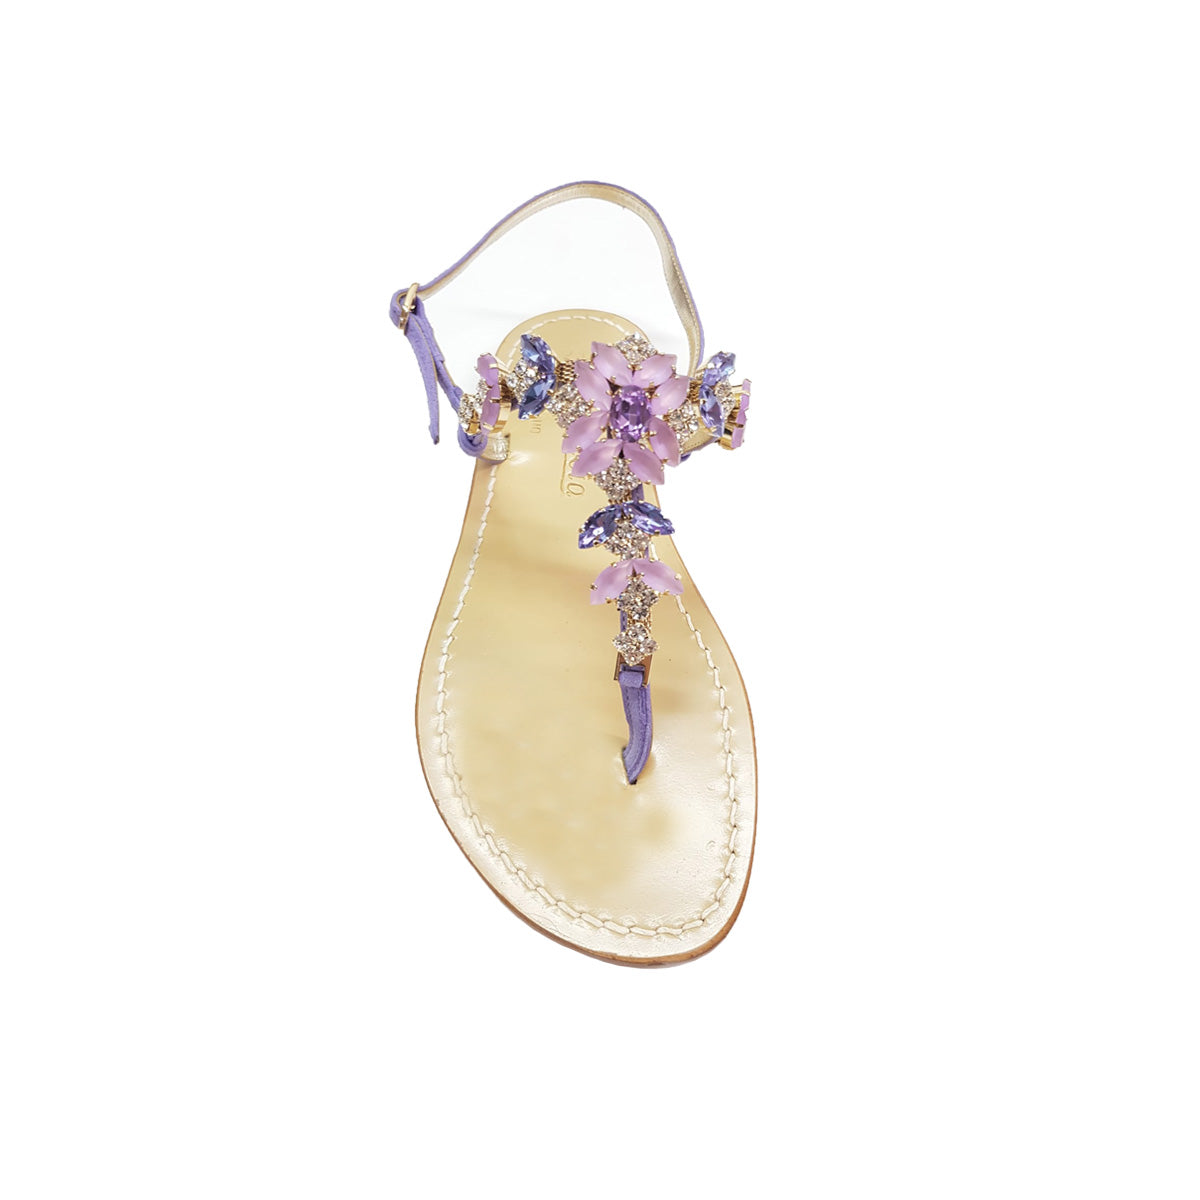 Positano sandal, with stones, violet